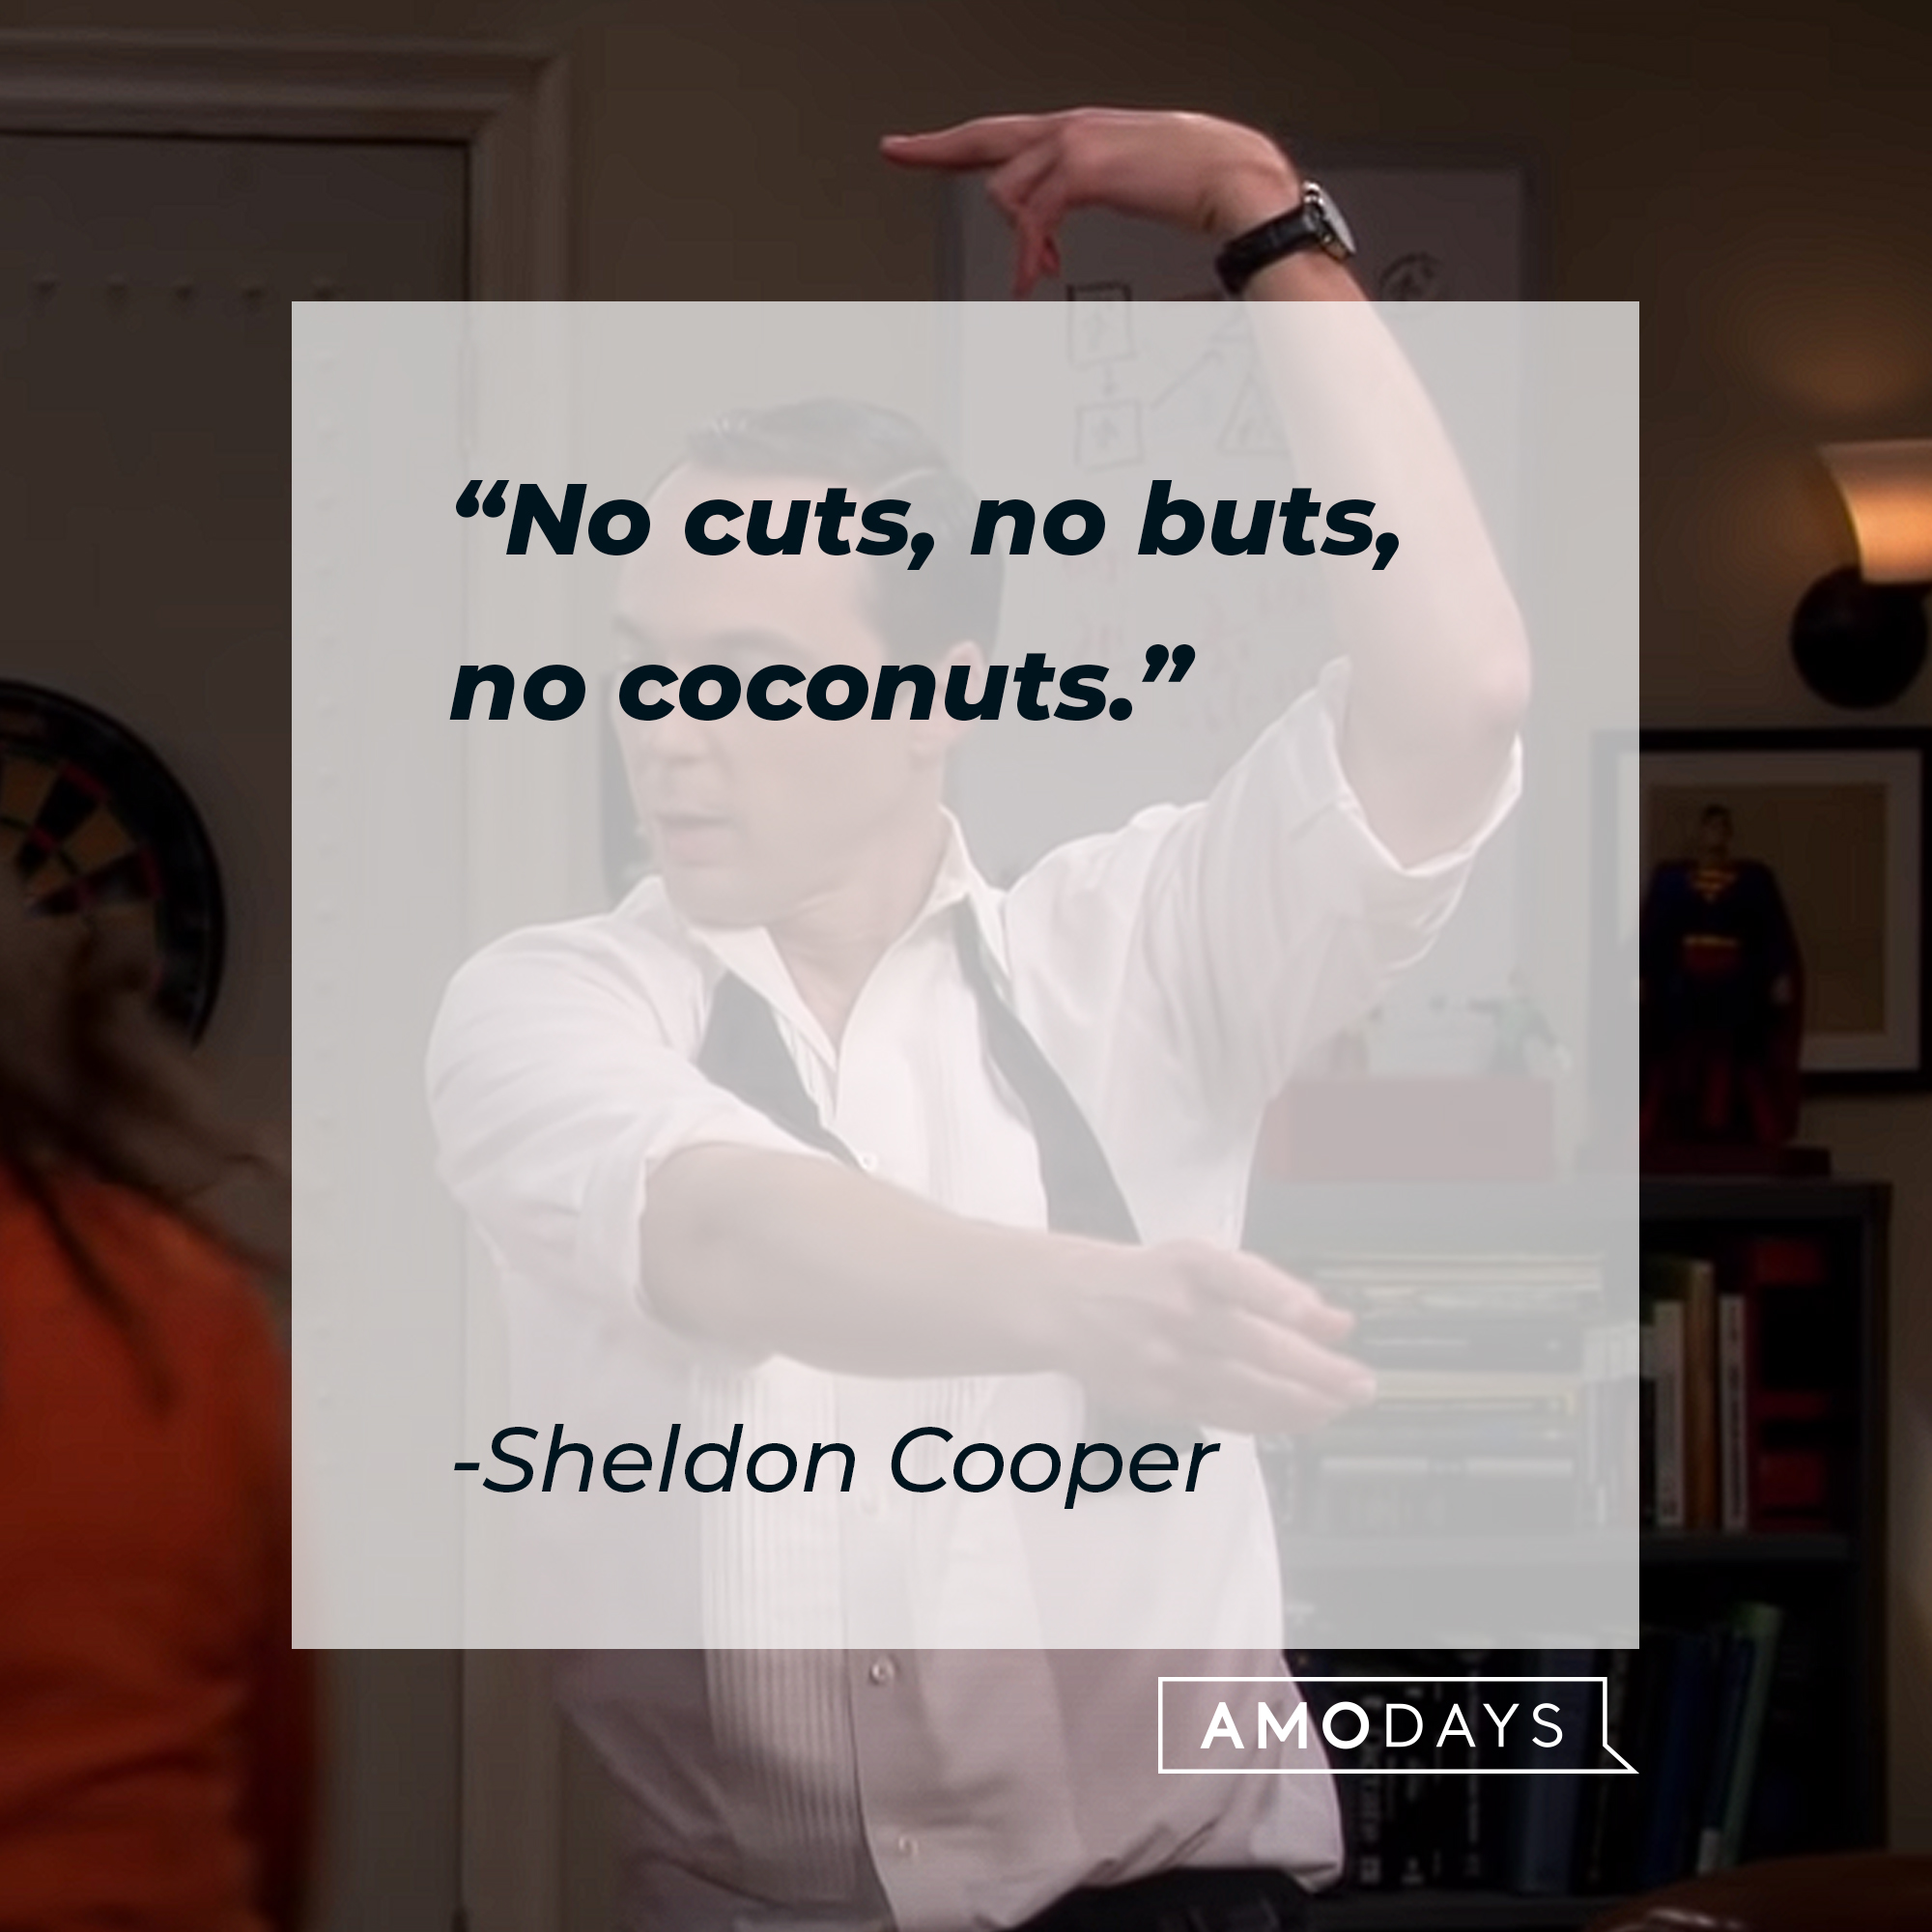 Sheldon Cooper's quote: "No cuts, no buts, no coconuts." — Sheldon Cooper